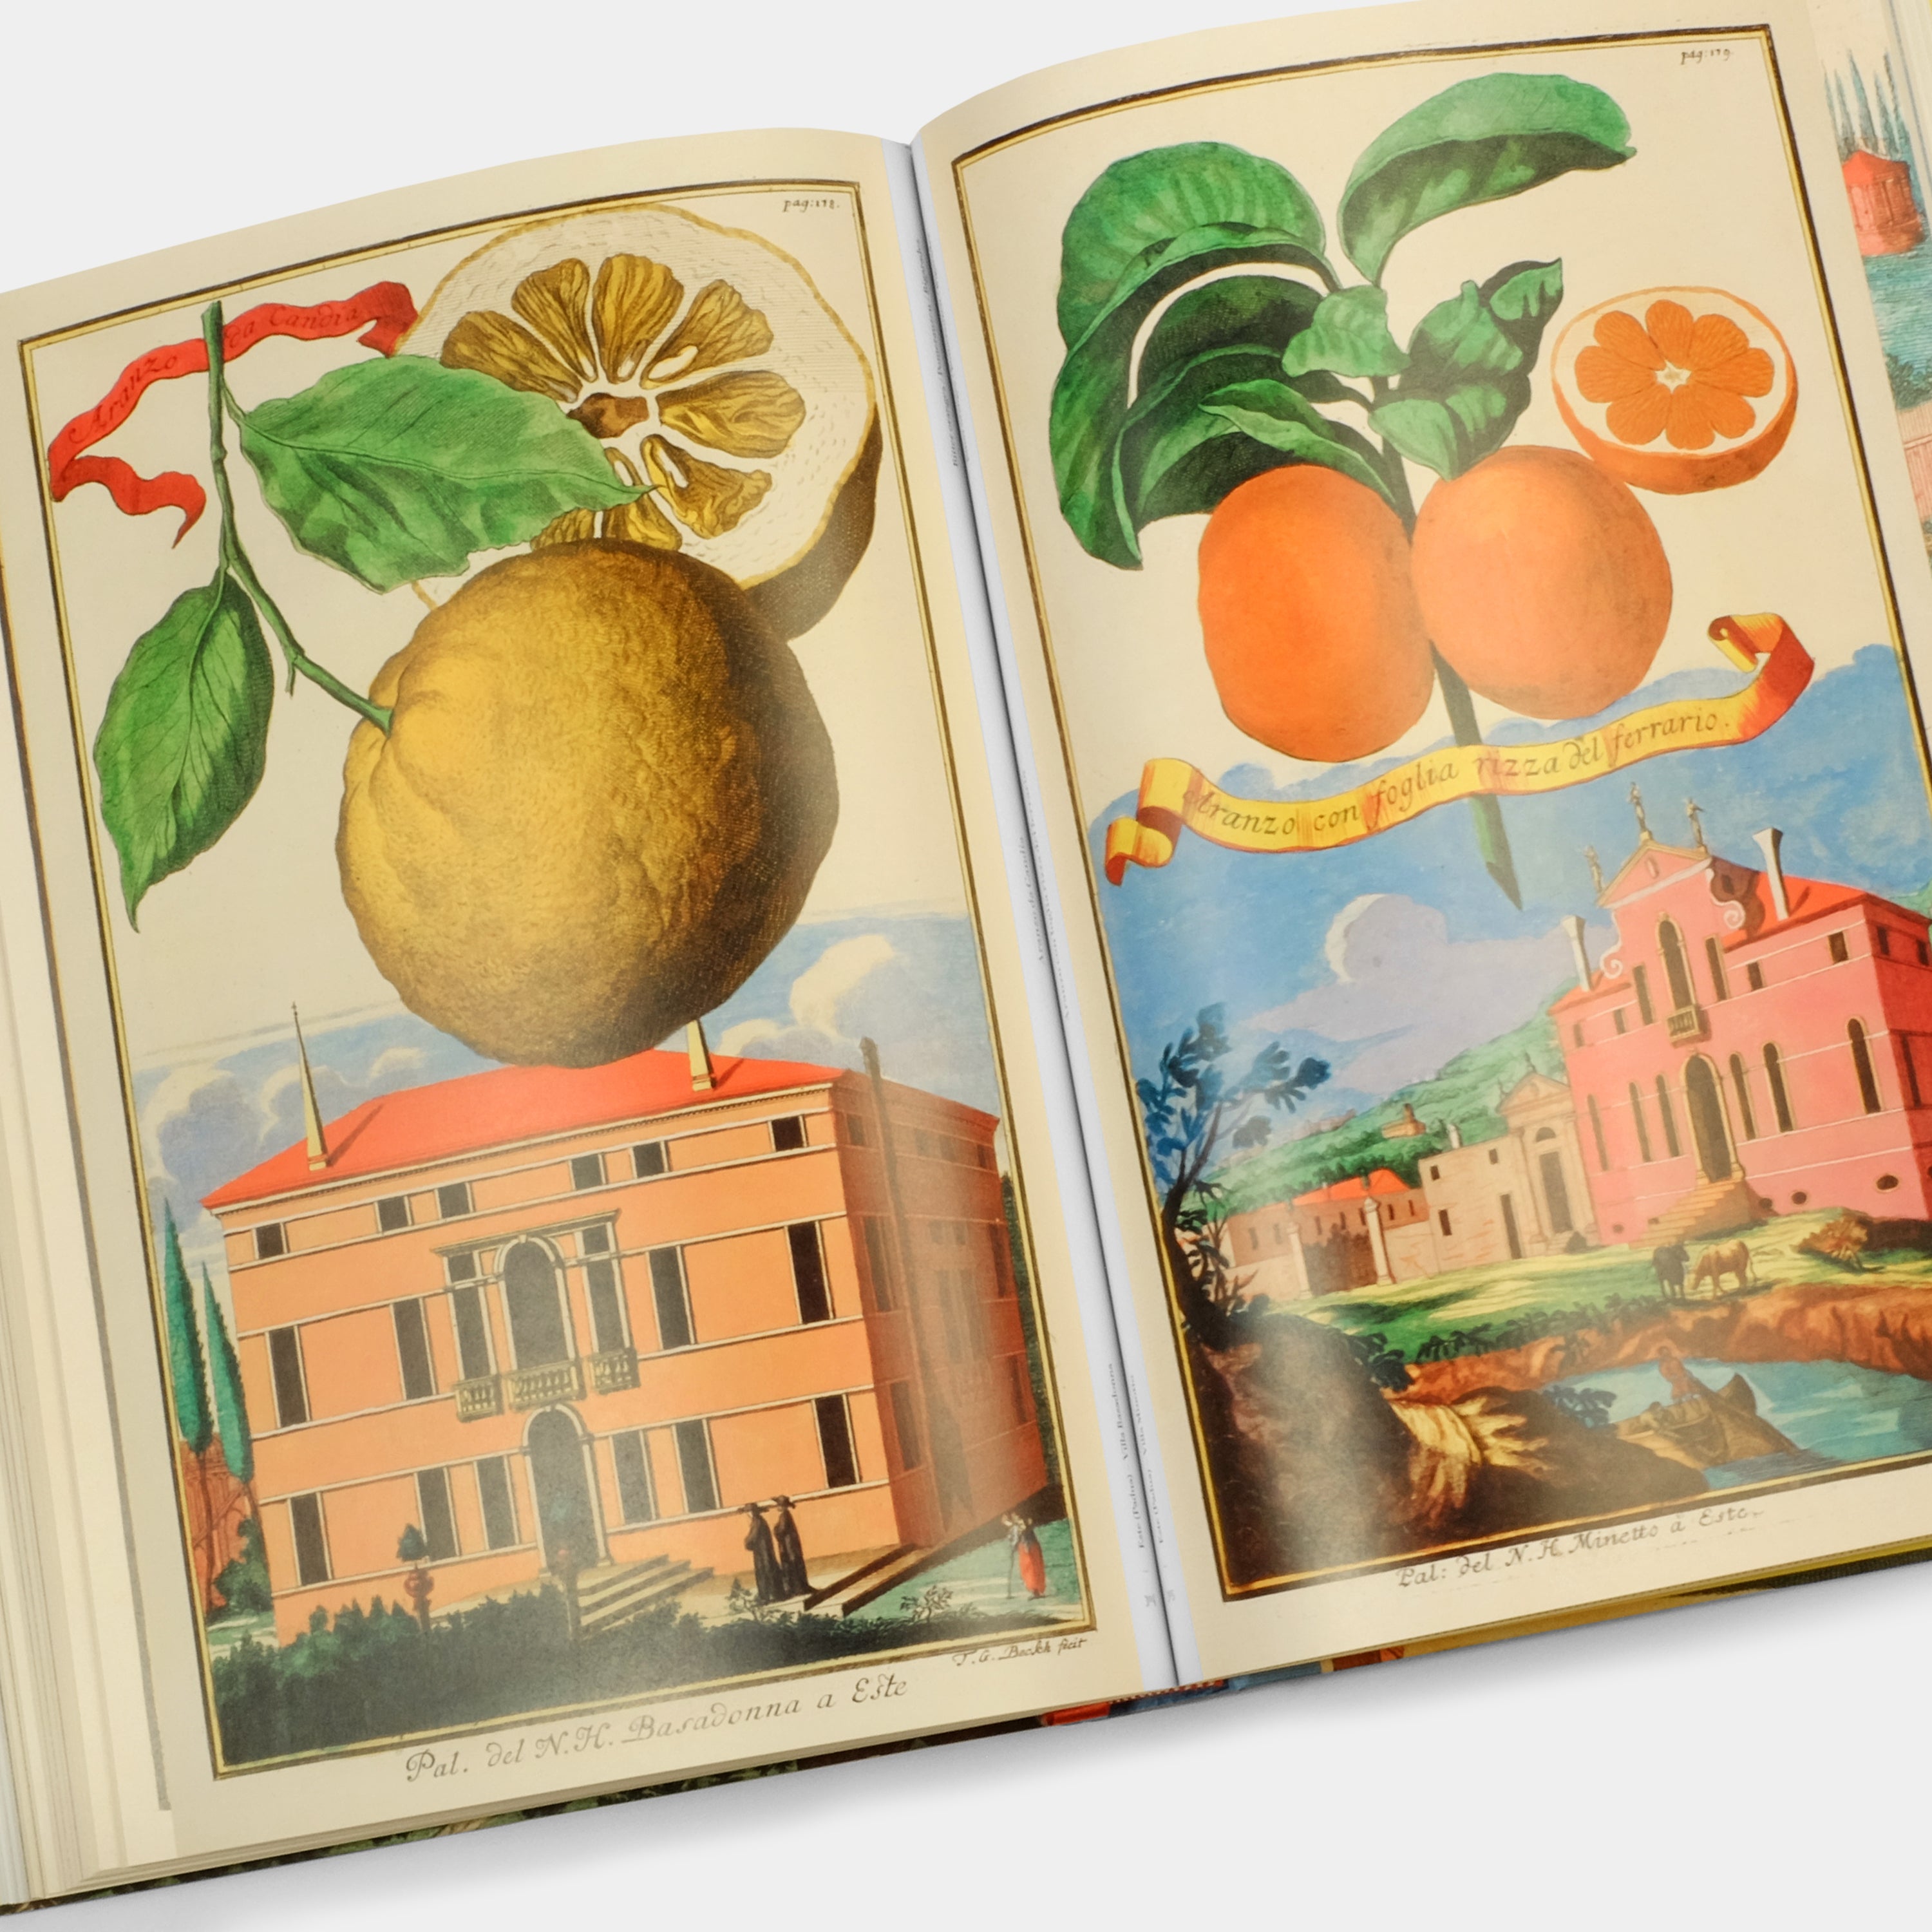 J. C. Volkamer: The Book of Citrus Fruits by Iris Lauterbach XXL Taschen Book